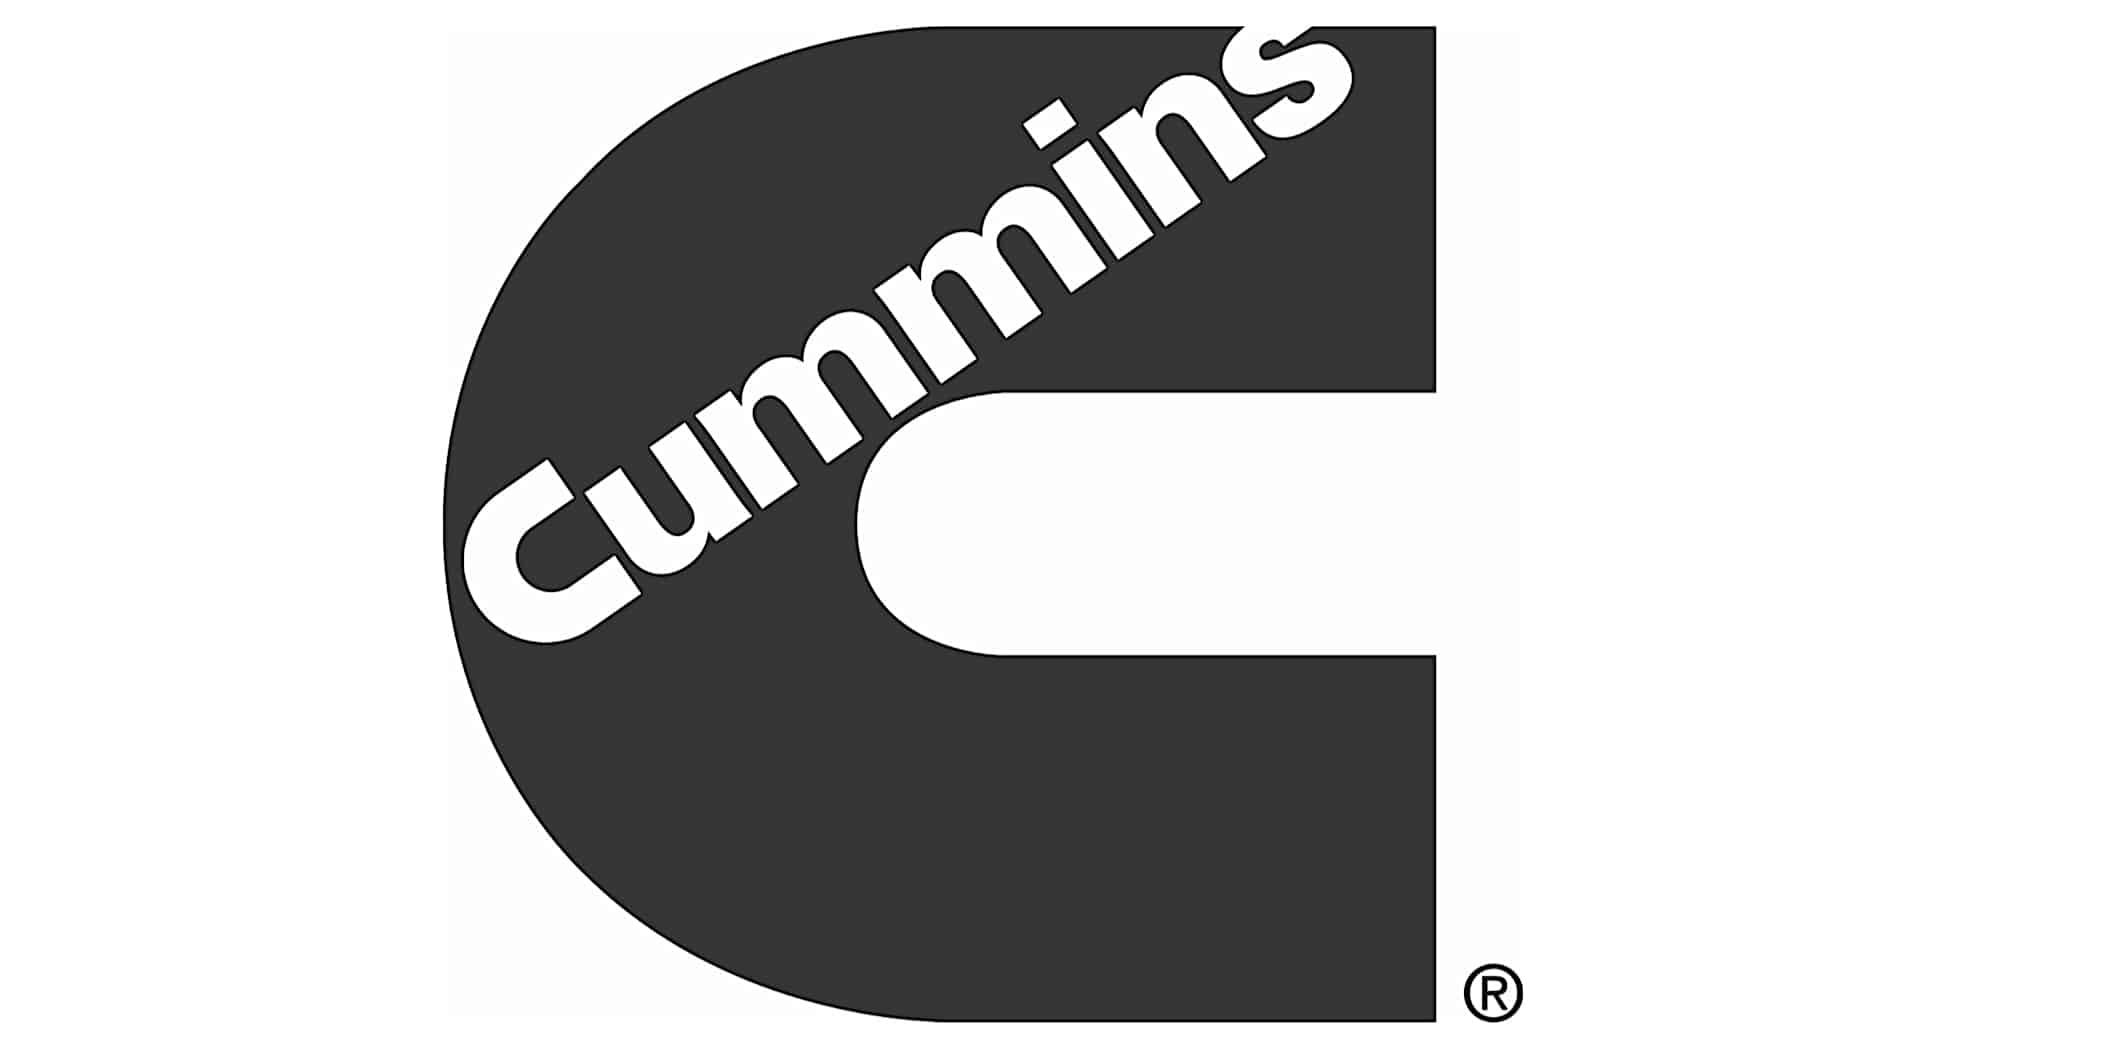 Cummins Appoints a New CFO School Transportation News